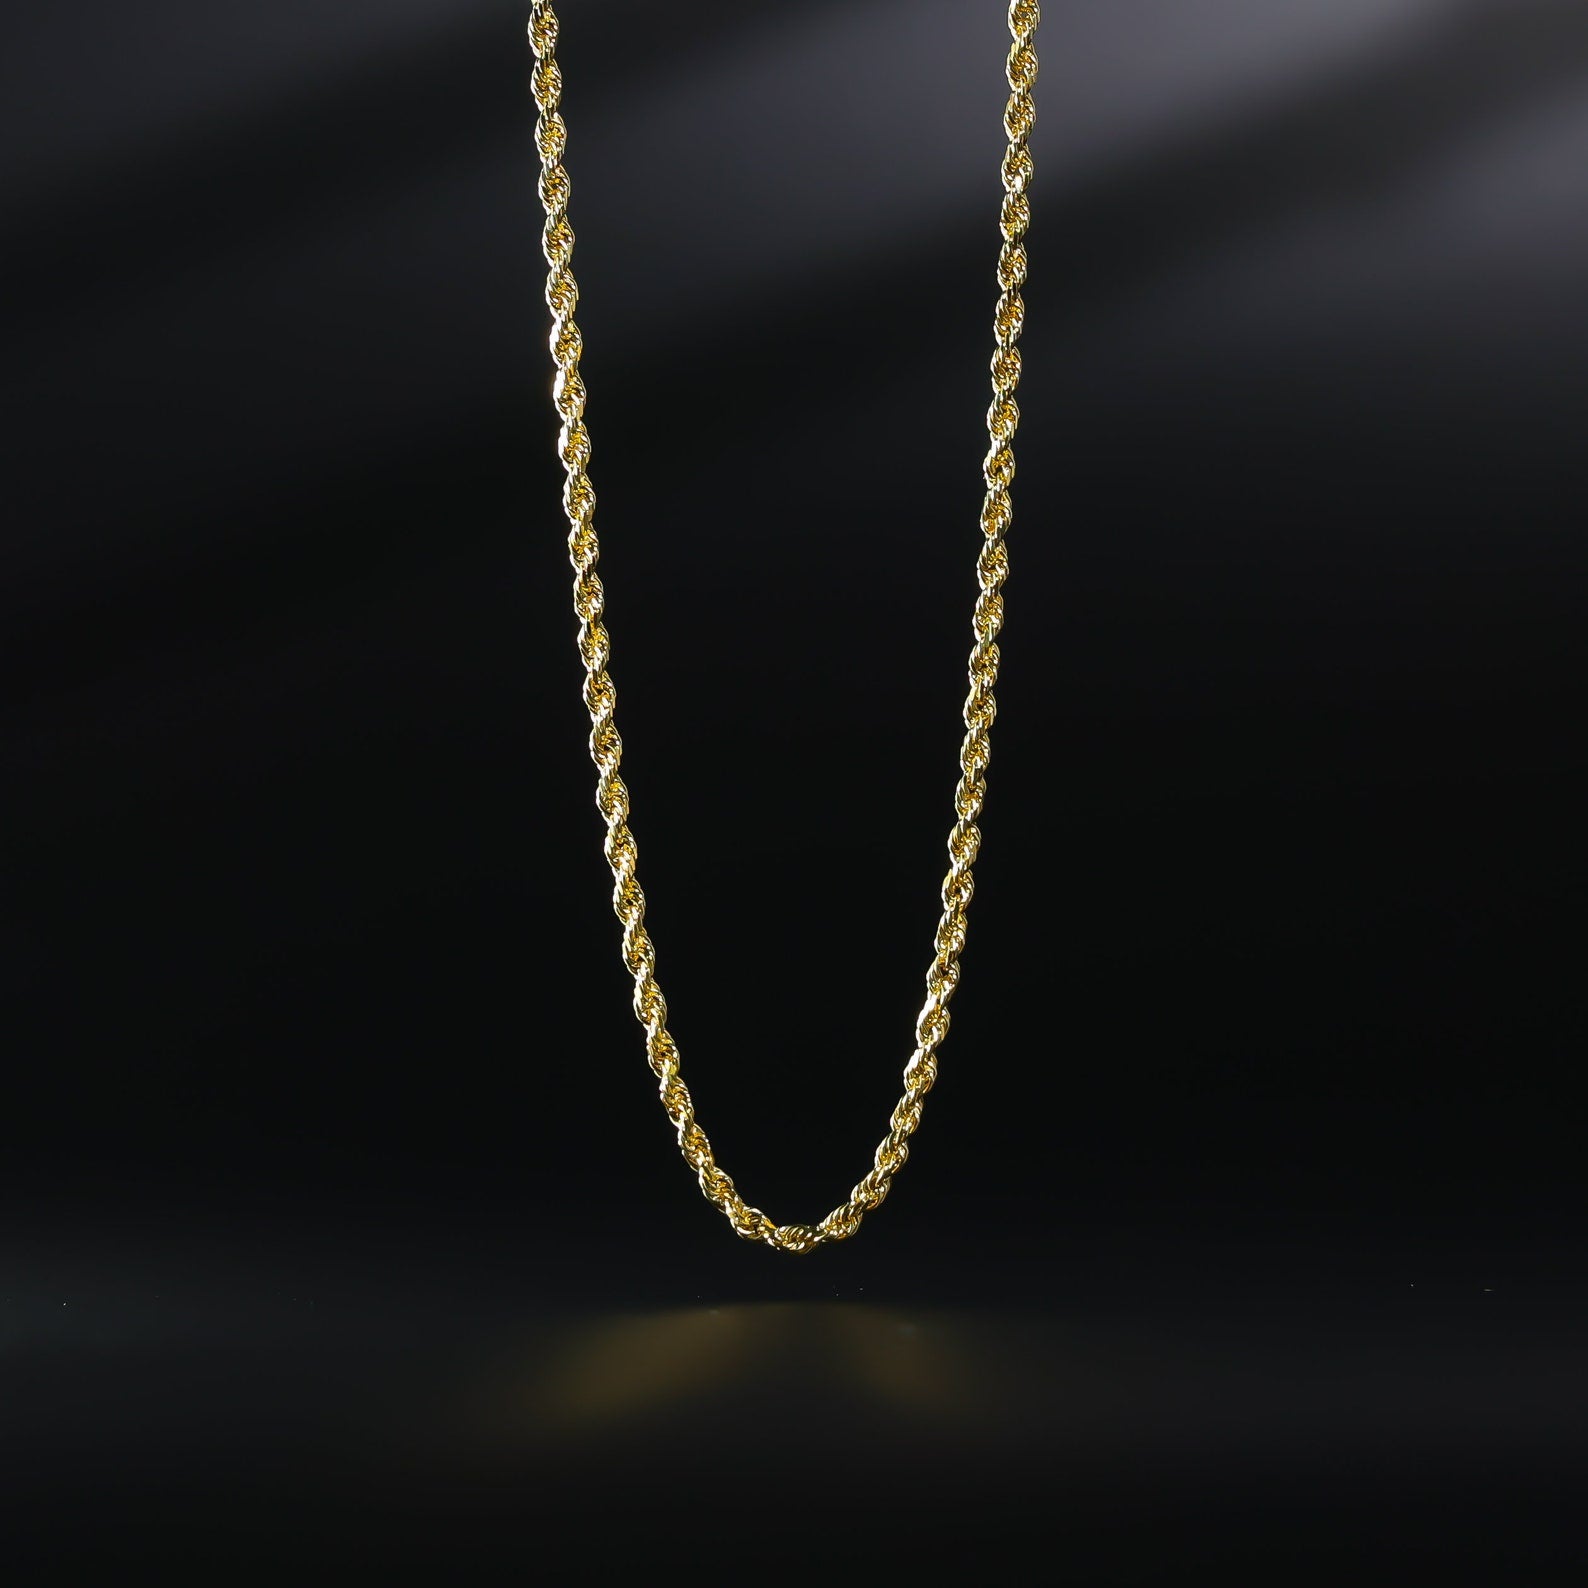 Gold St. Jude Enamel Pendant Model-0166 - Charlie & Co. Jewelry